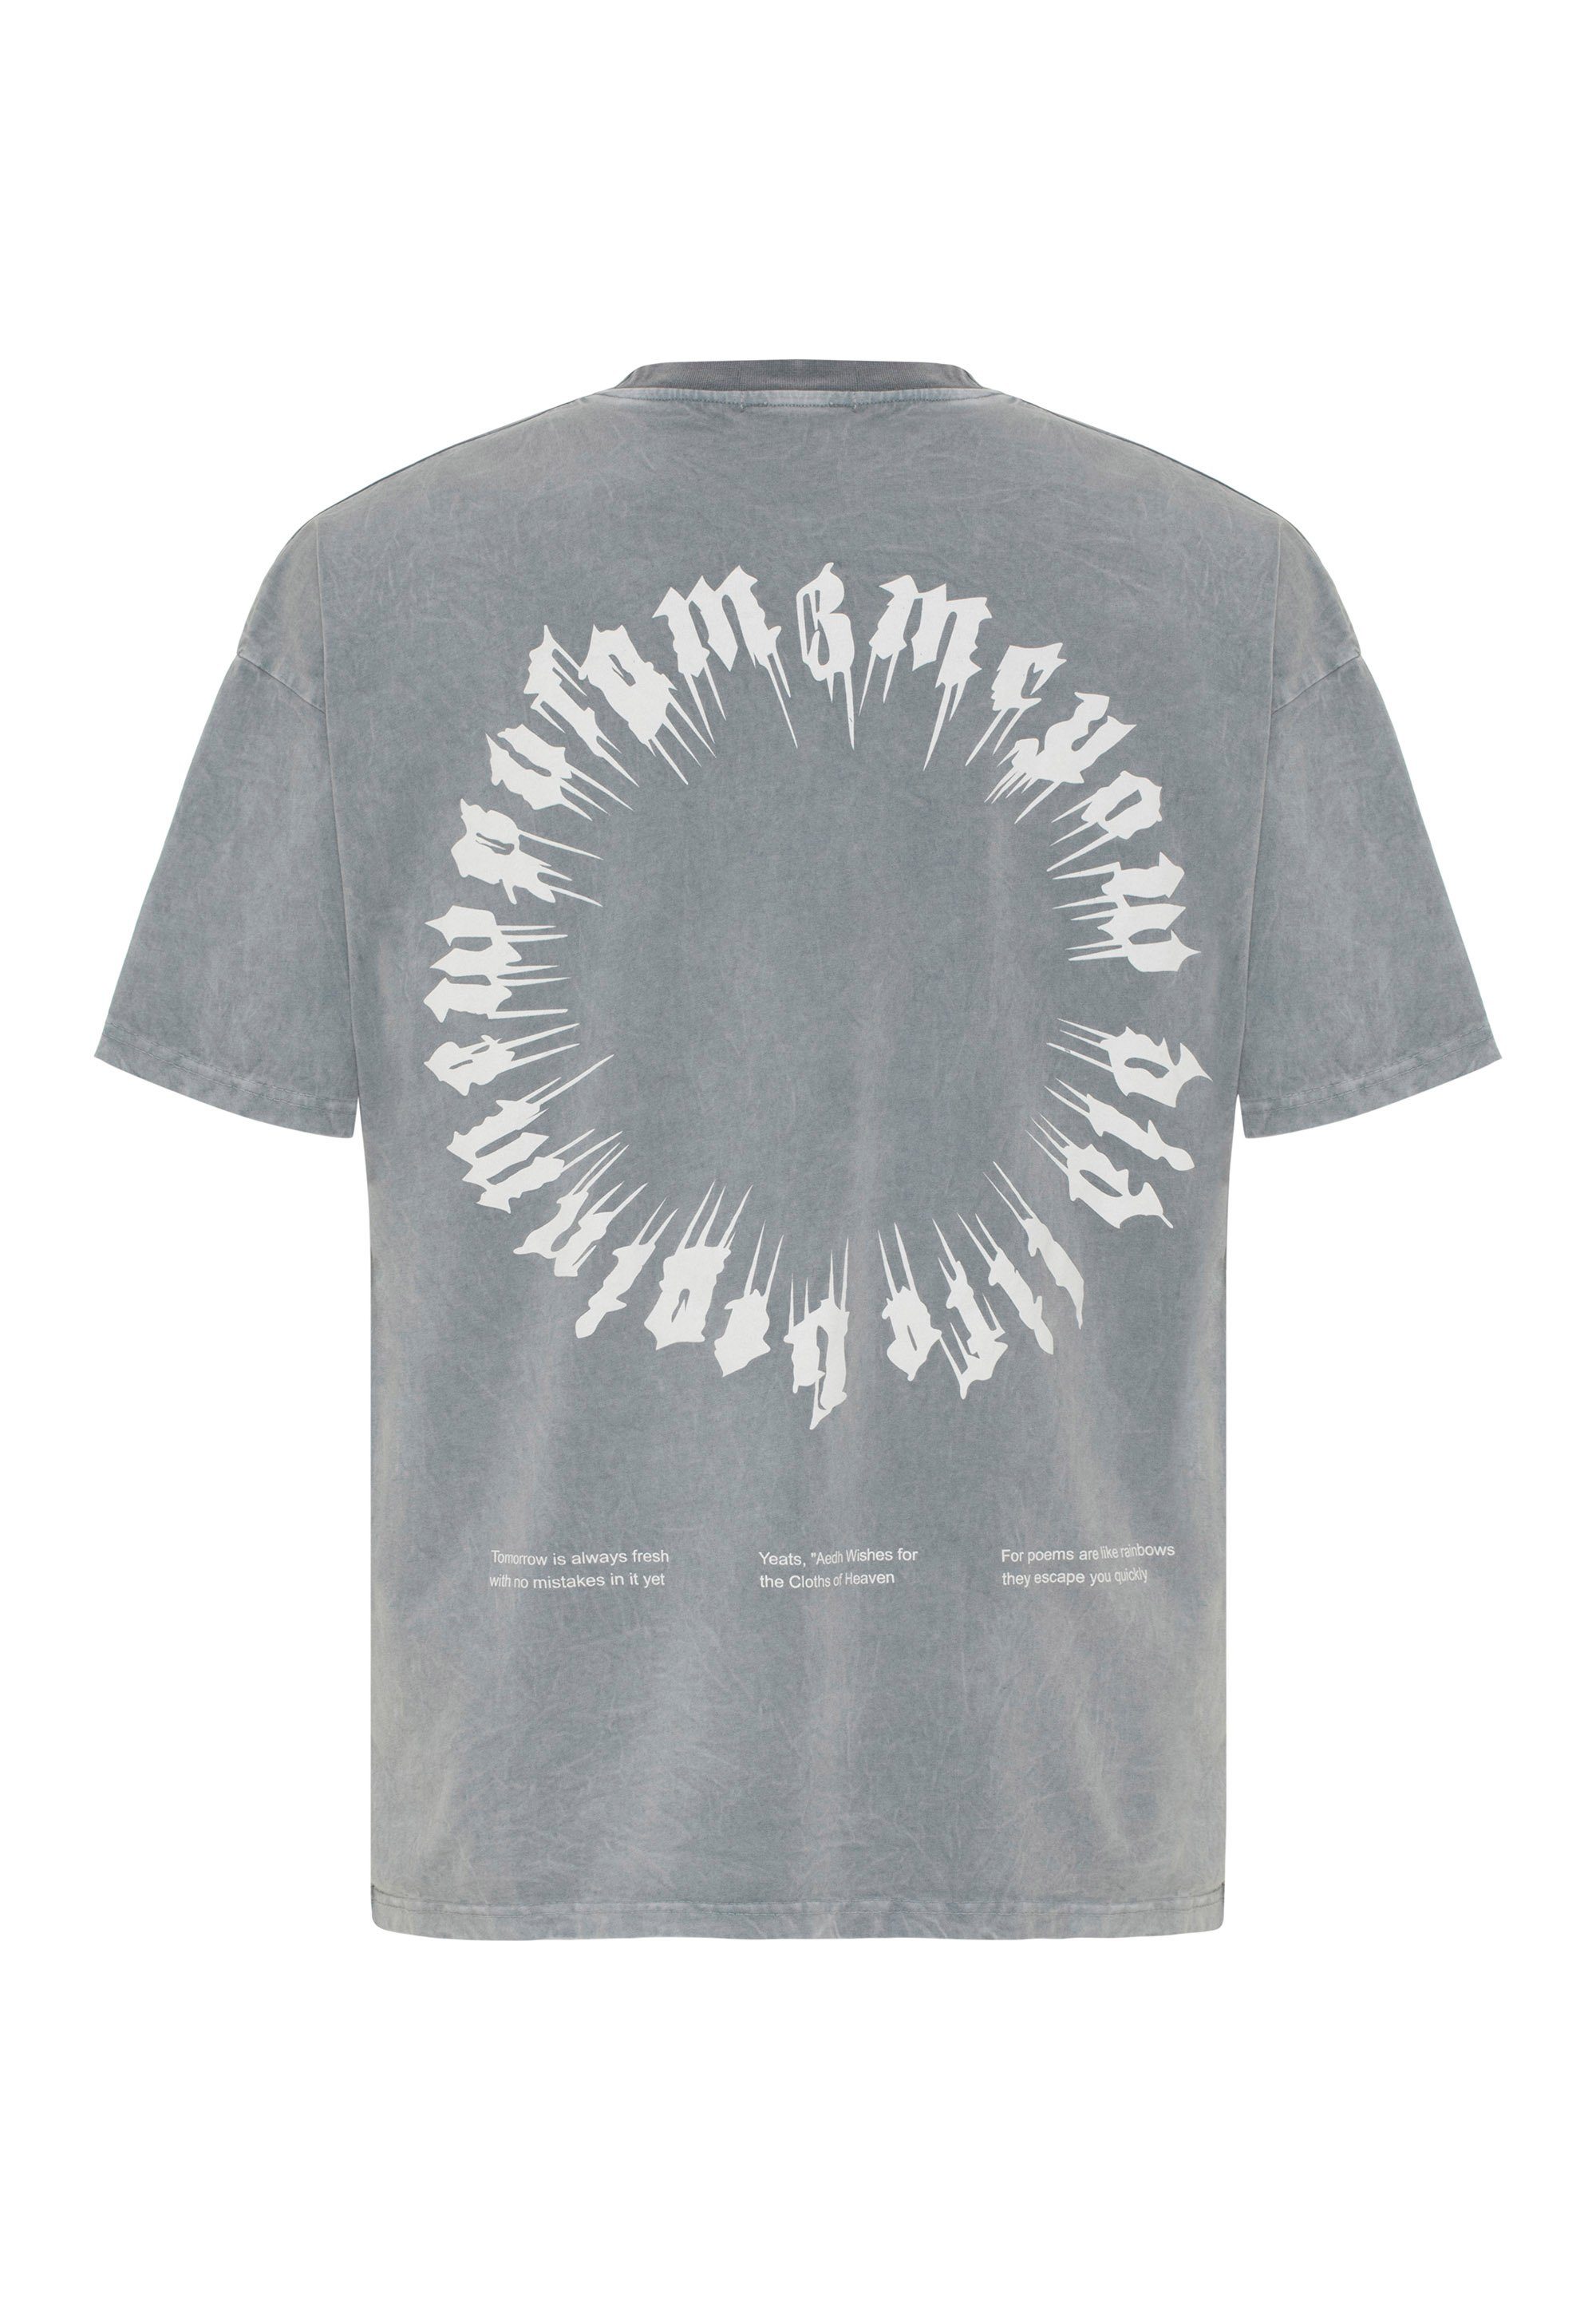 RedBridge T-Shirt Runcorn mit auf grau dem Rücken Print großflächigem